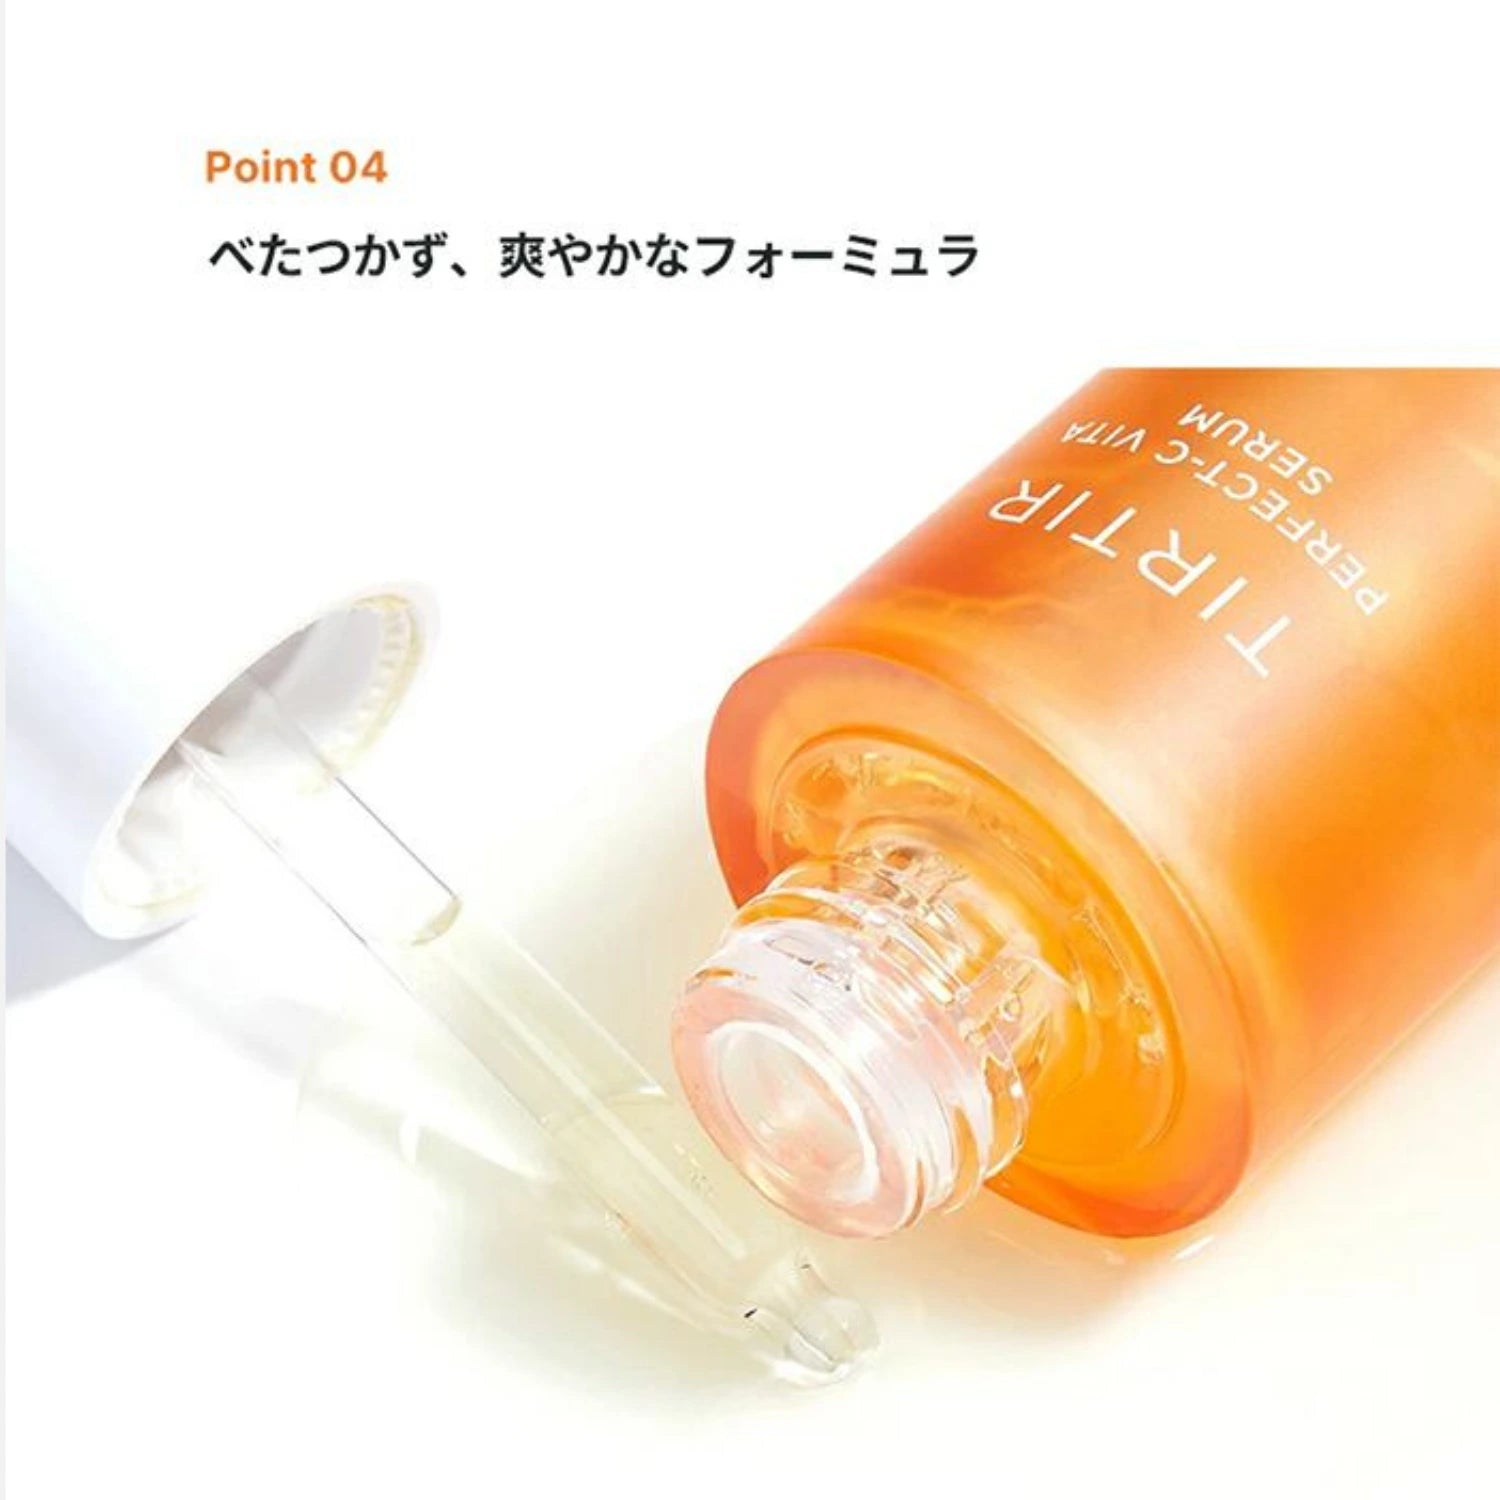 TIRTIR Perfect-C Vita Serum 30ml - Buy Me Japan